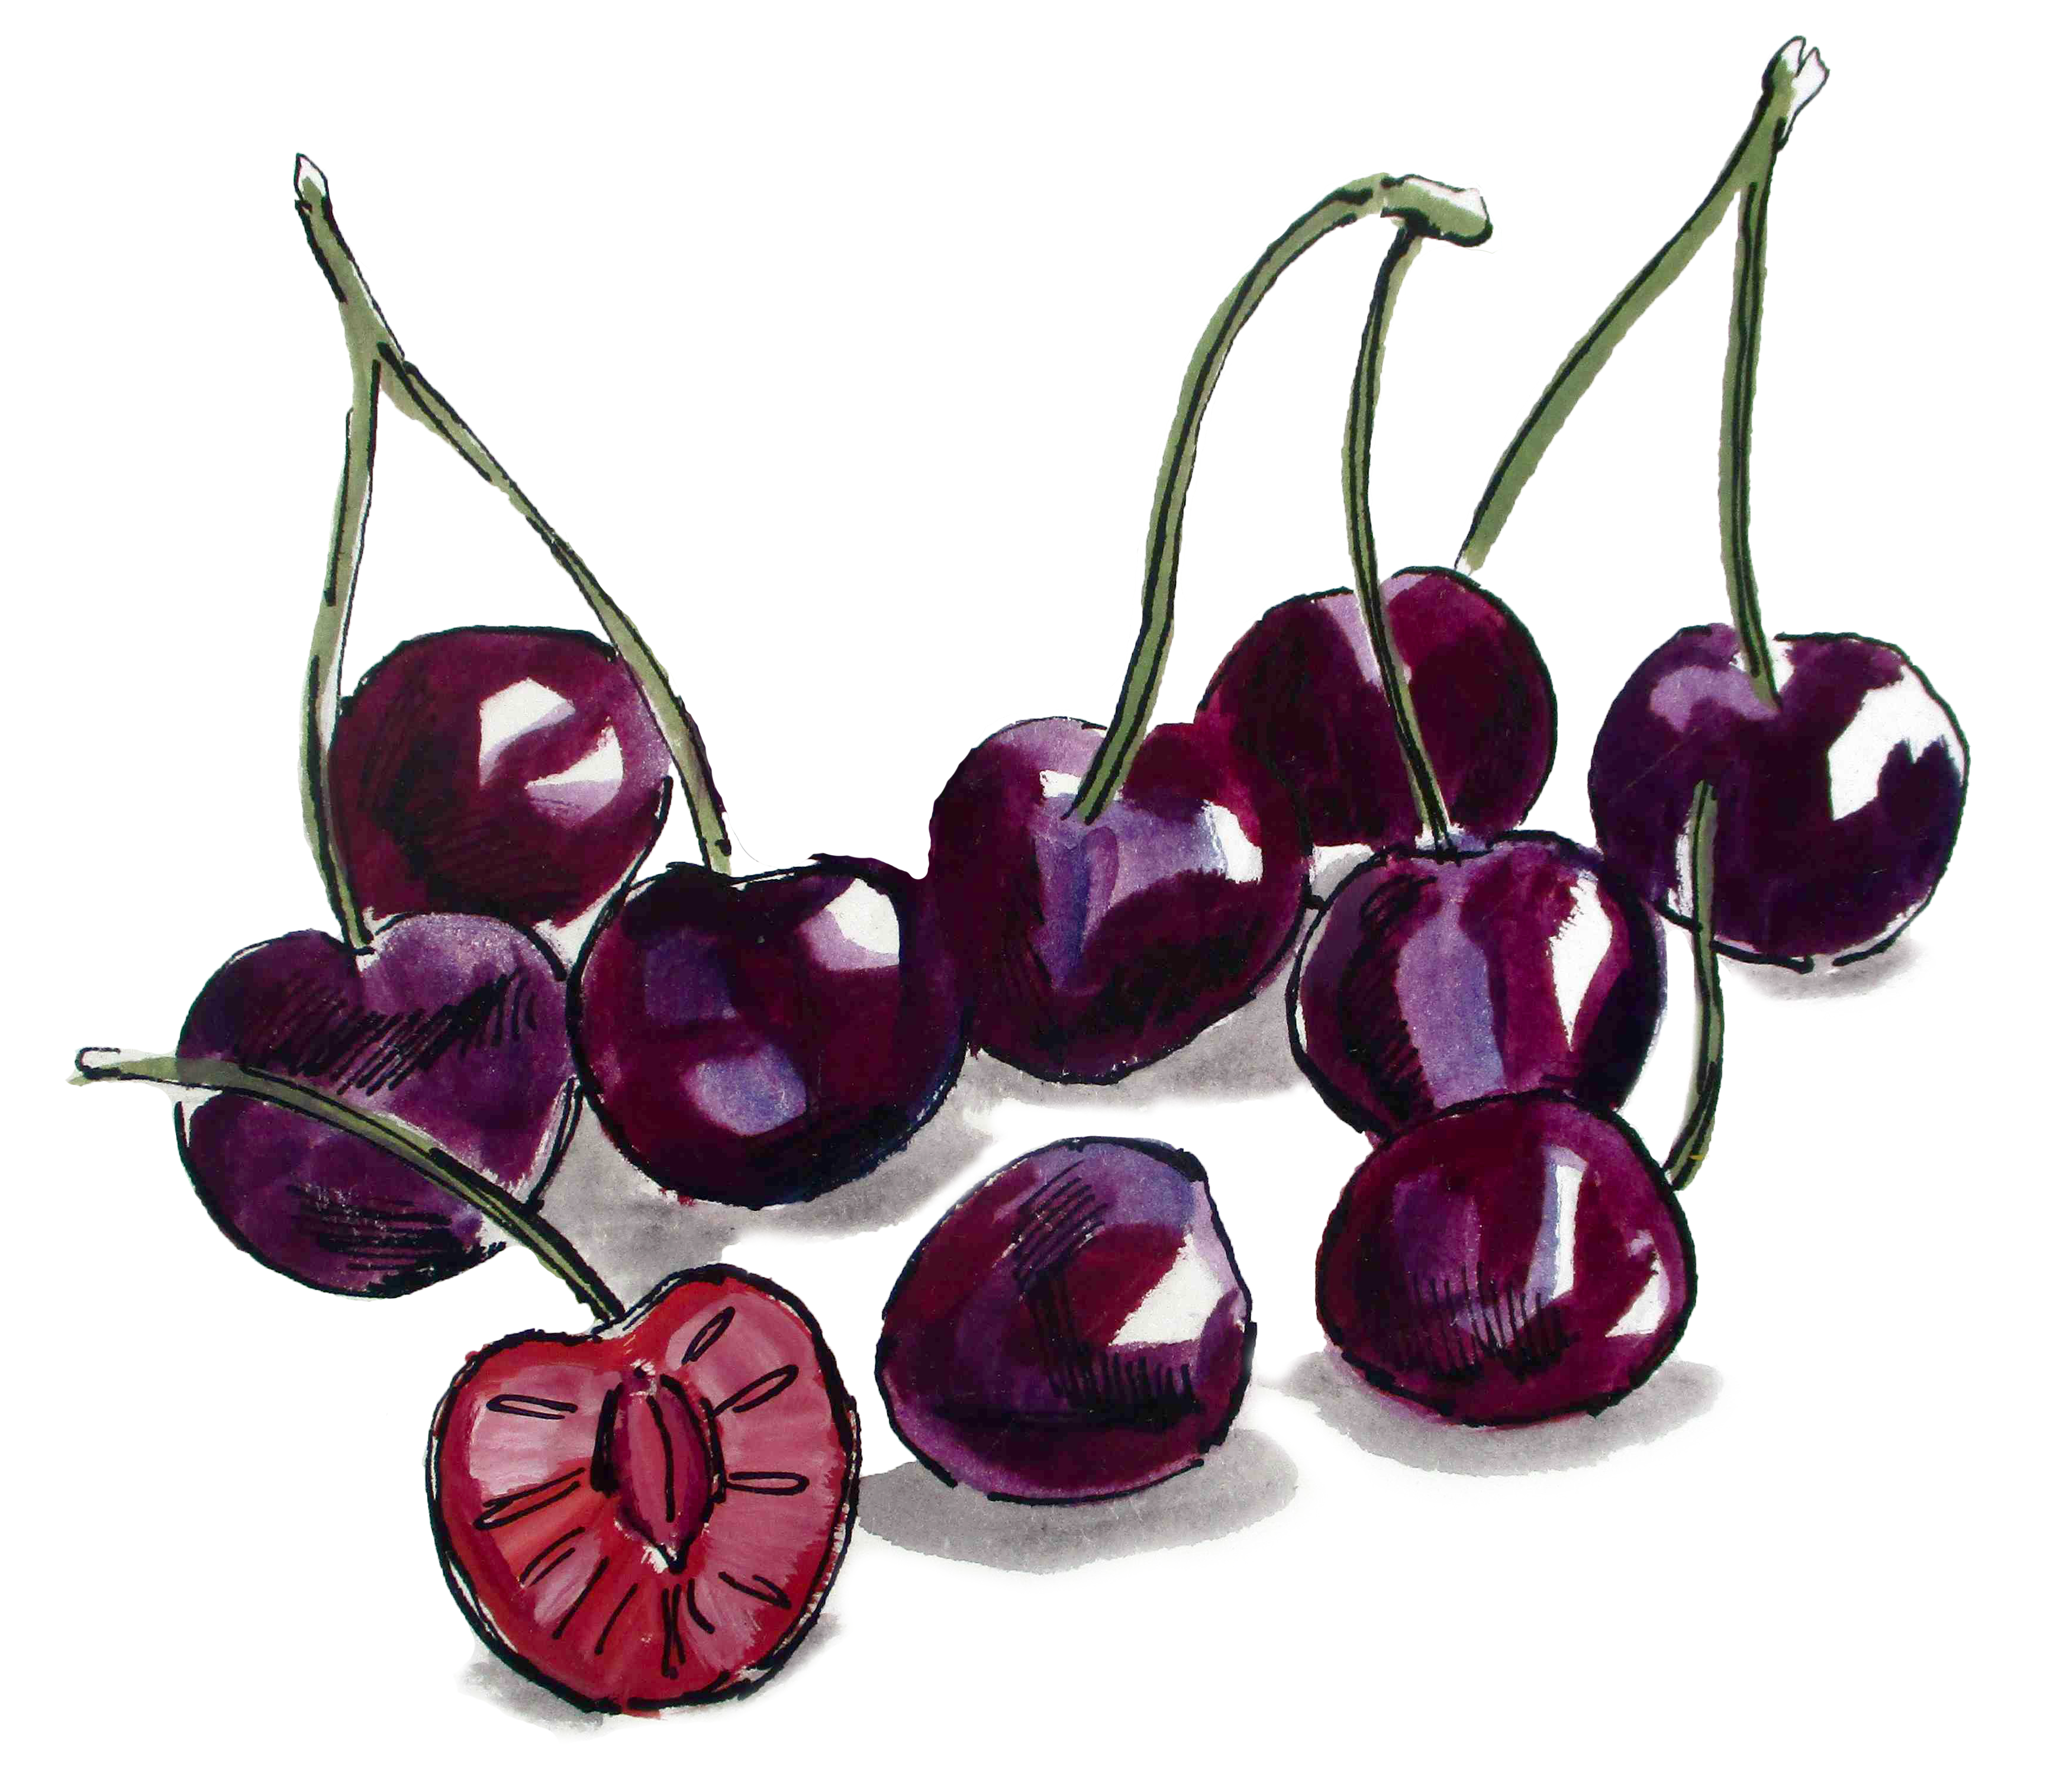 watercolor illustration of cherries